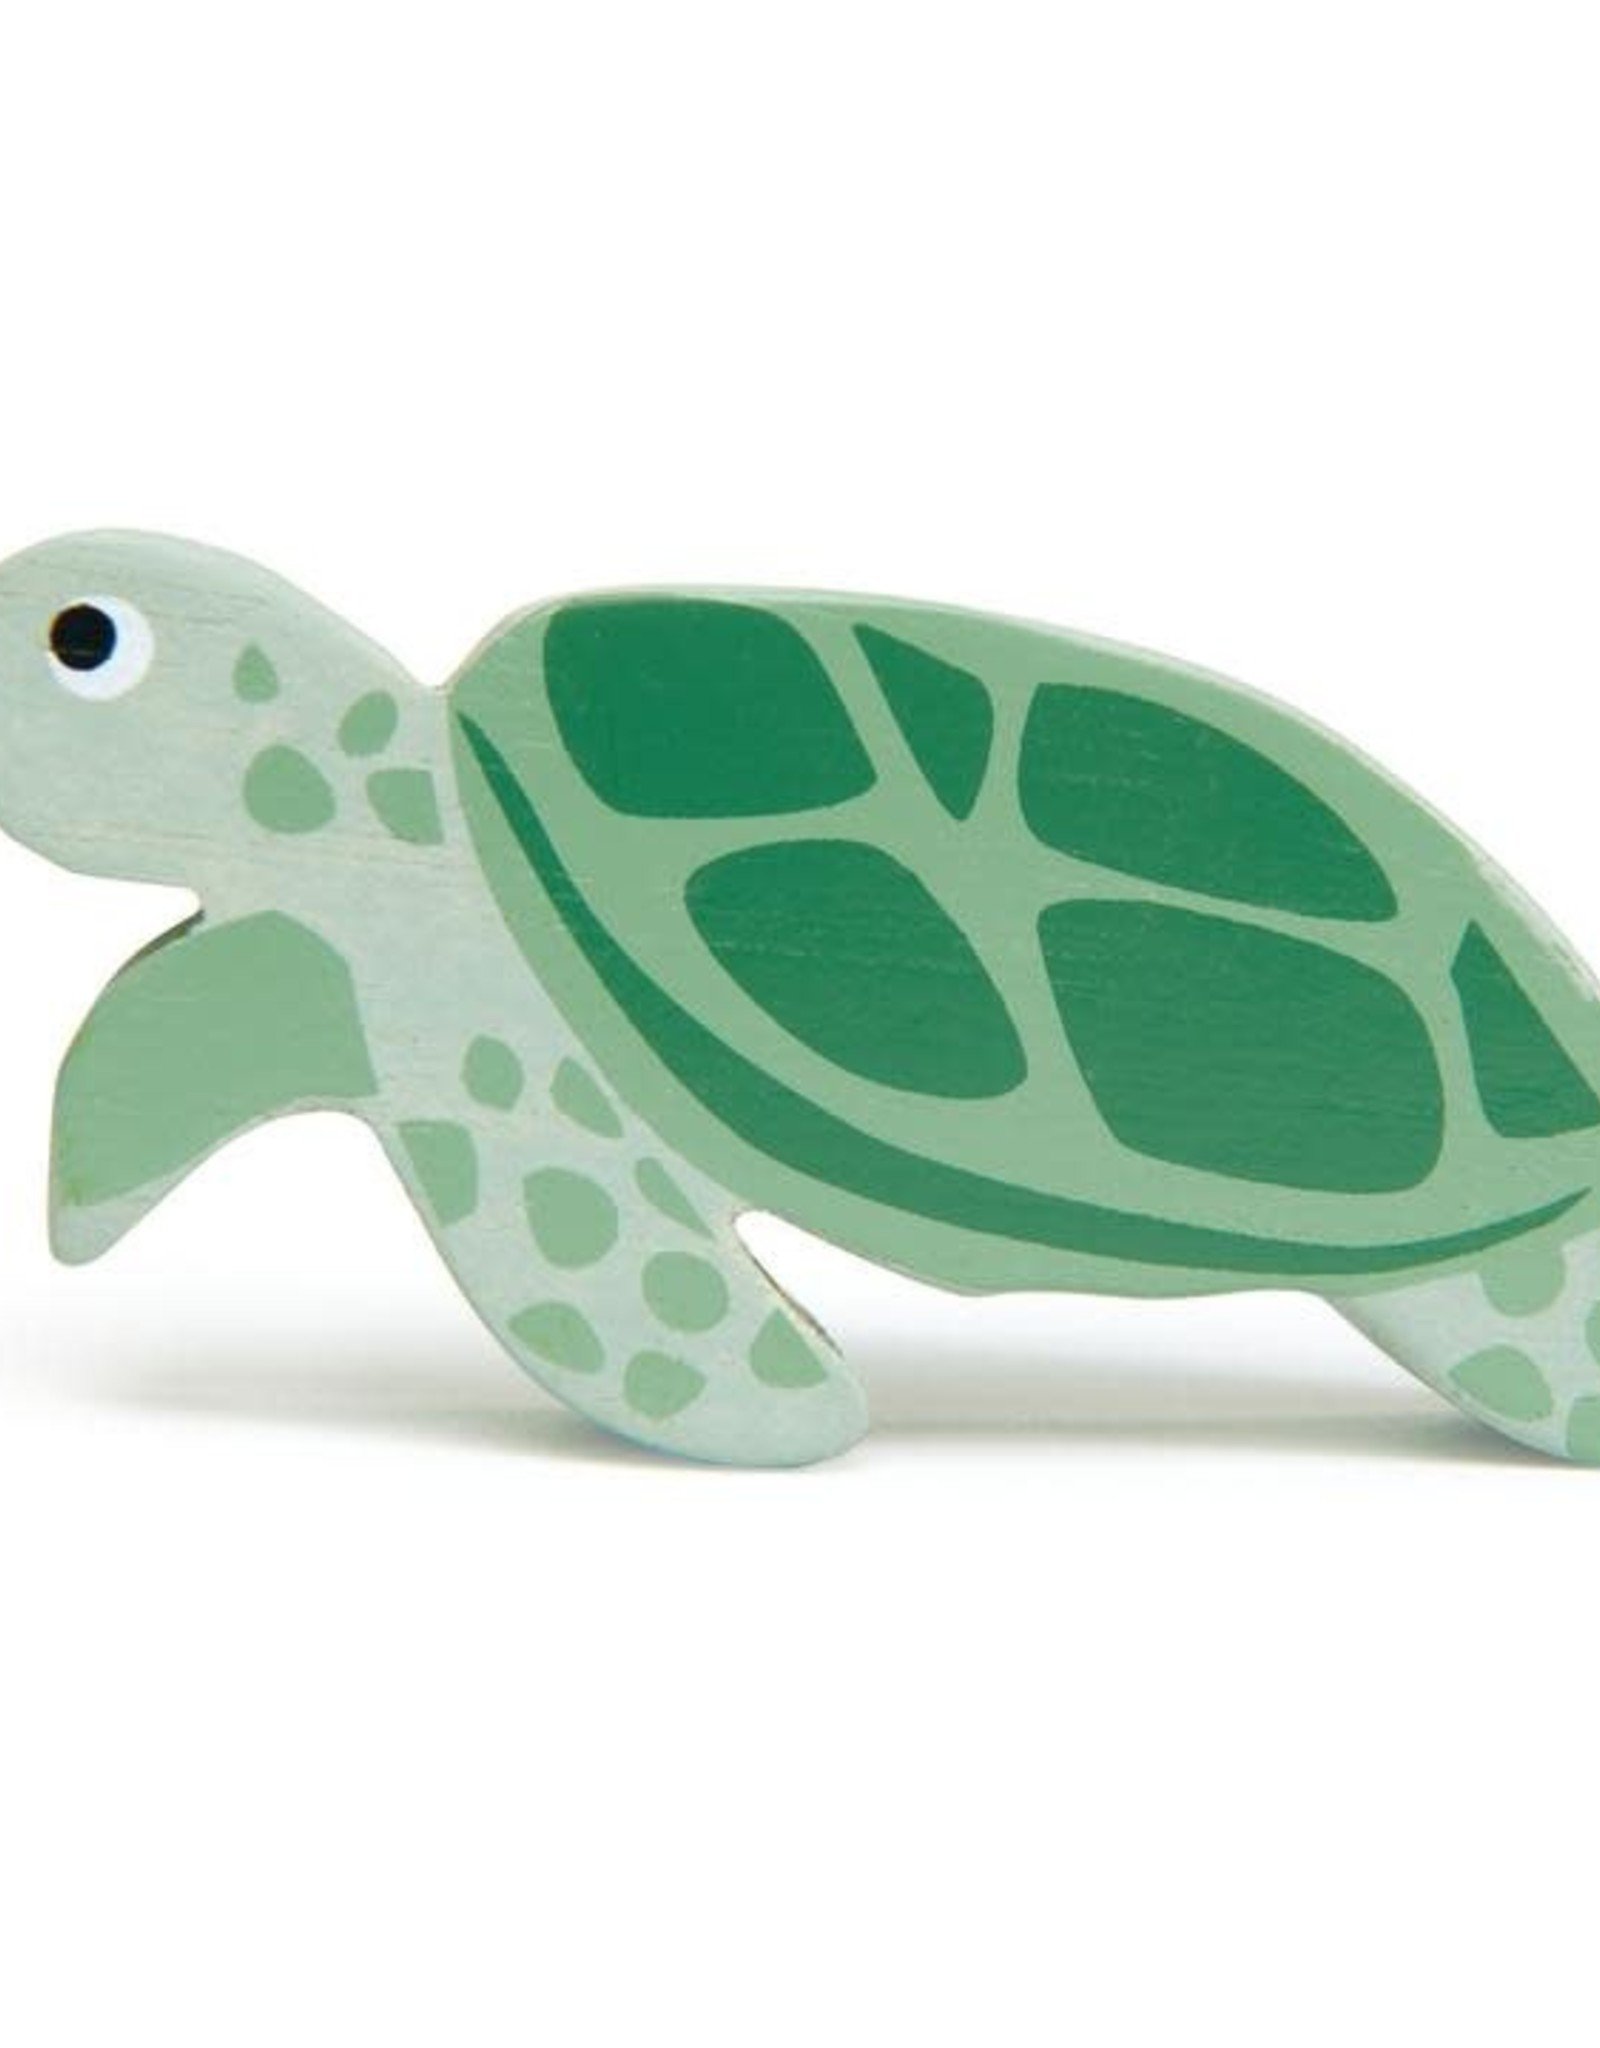 Tender Leaf Toys Tender Leaf Wooden Sea Turtle